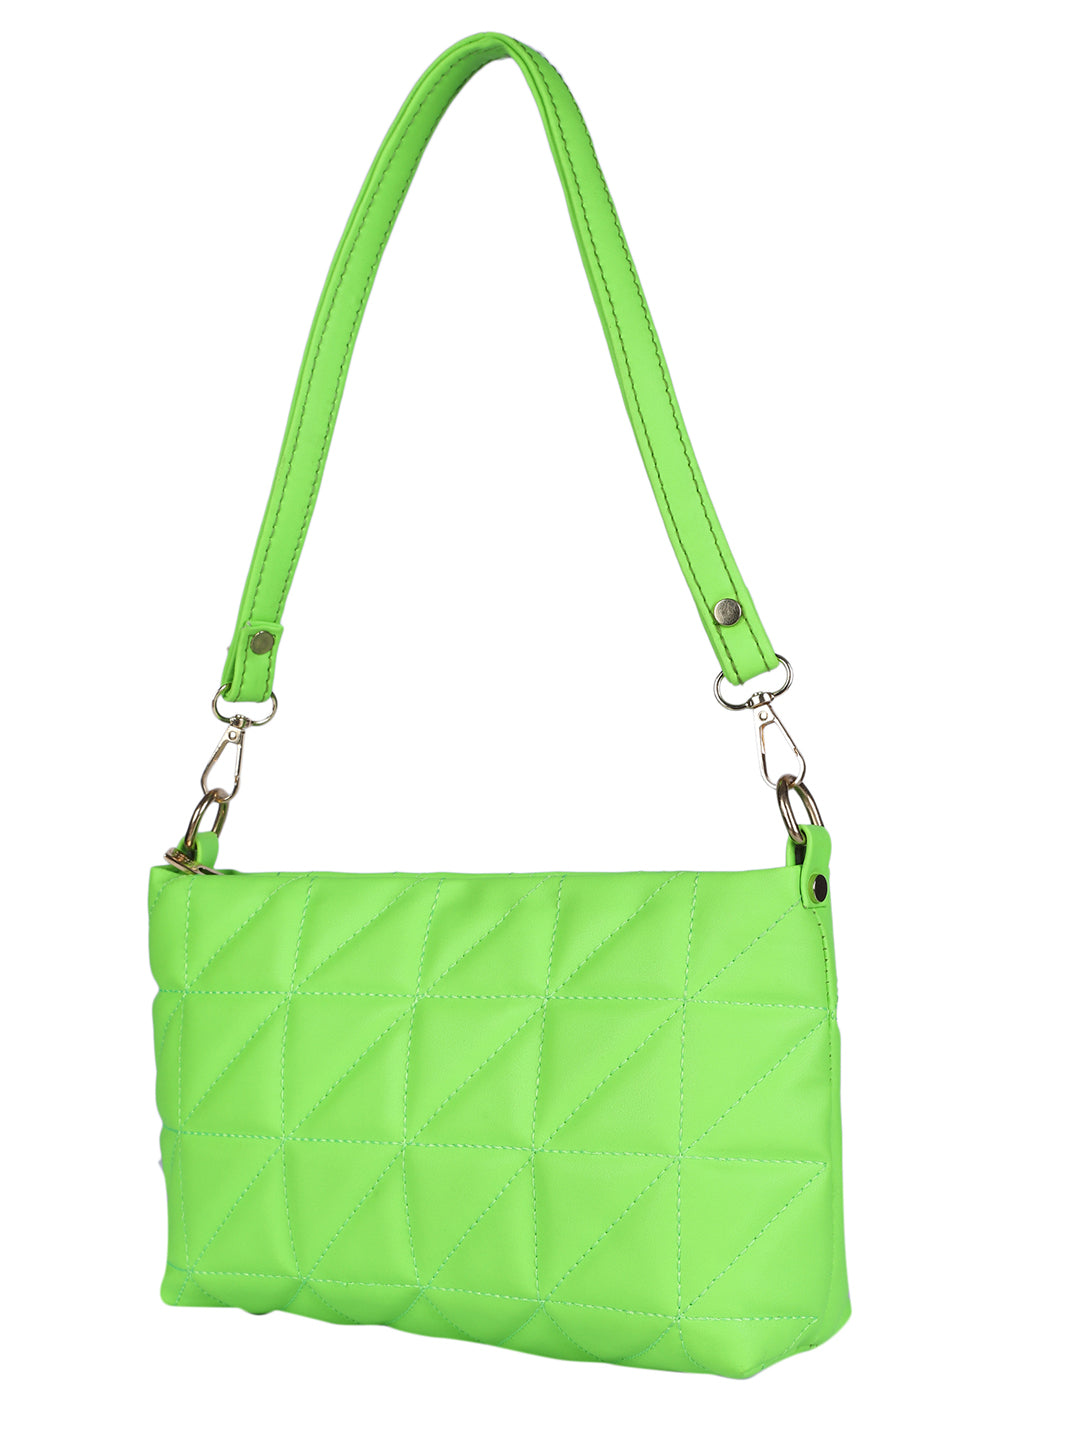 MINI WESST Women's Green Shoulder & Sling Bag Both